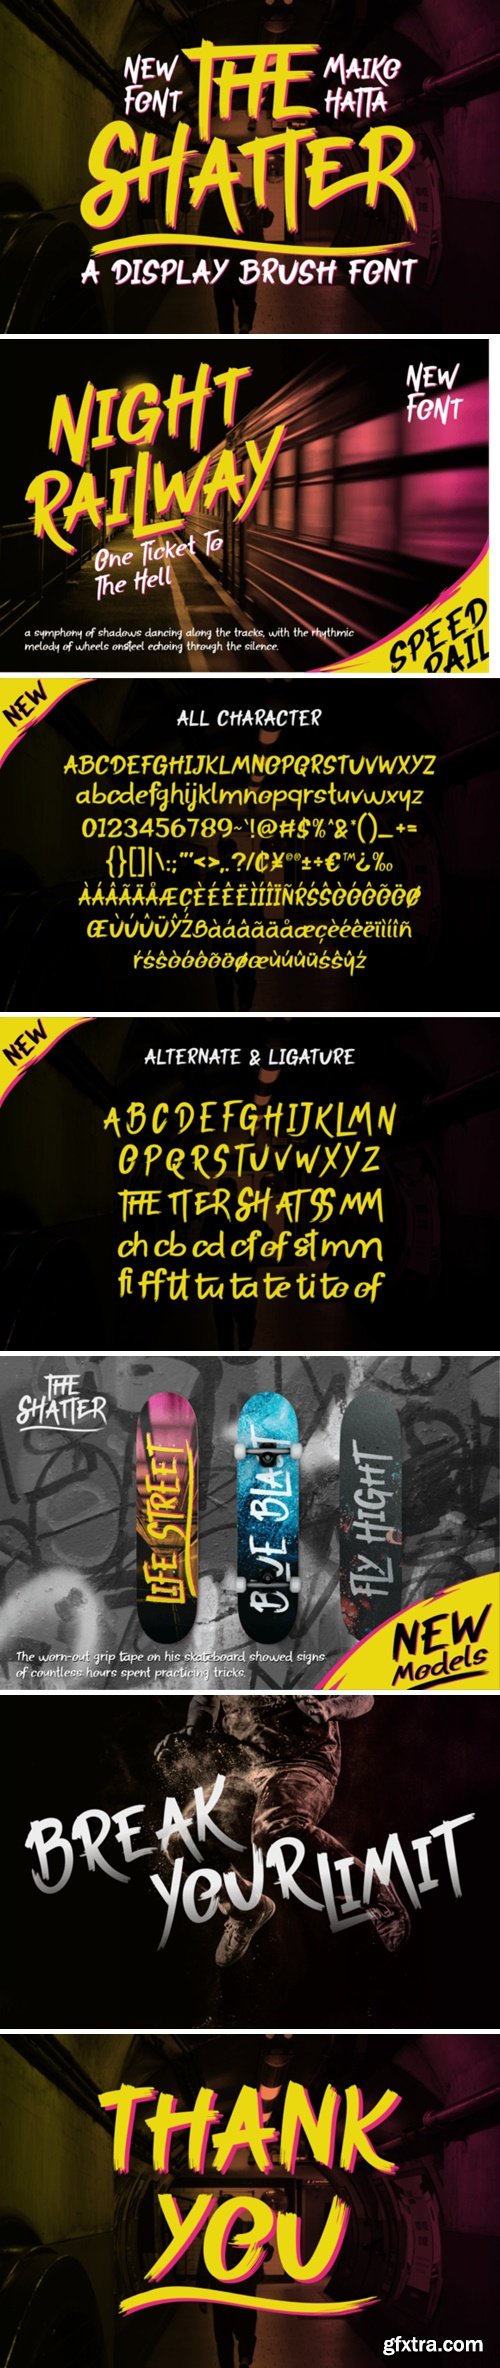 The Shatter Font